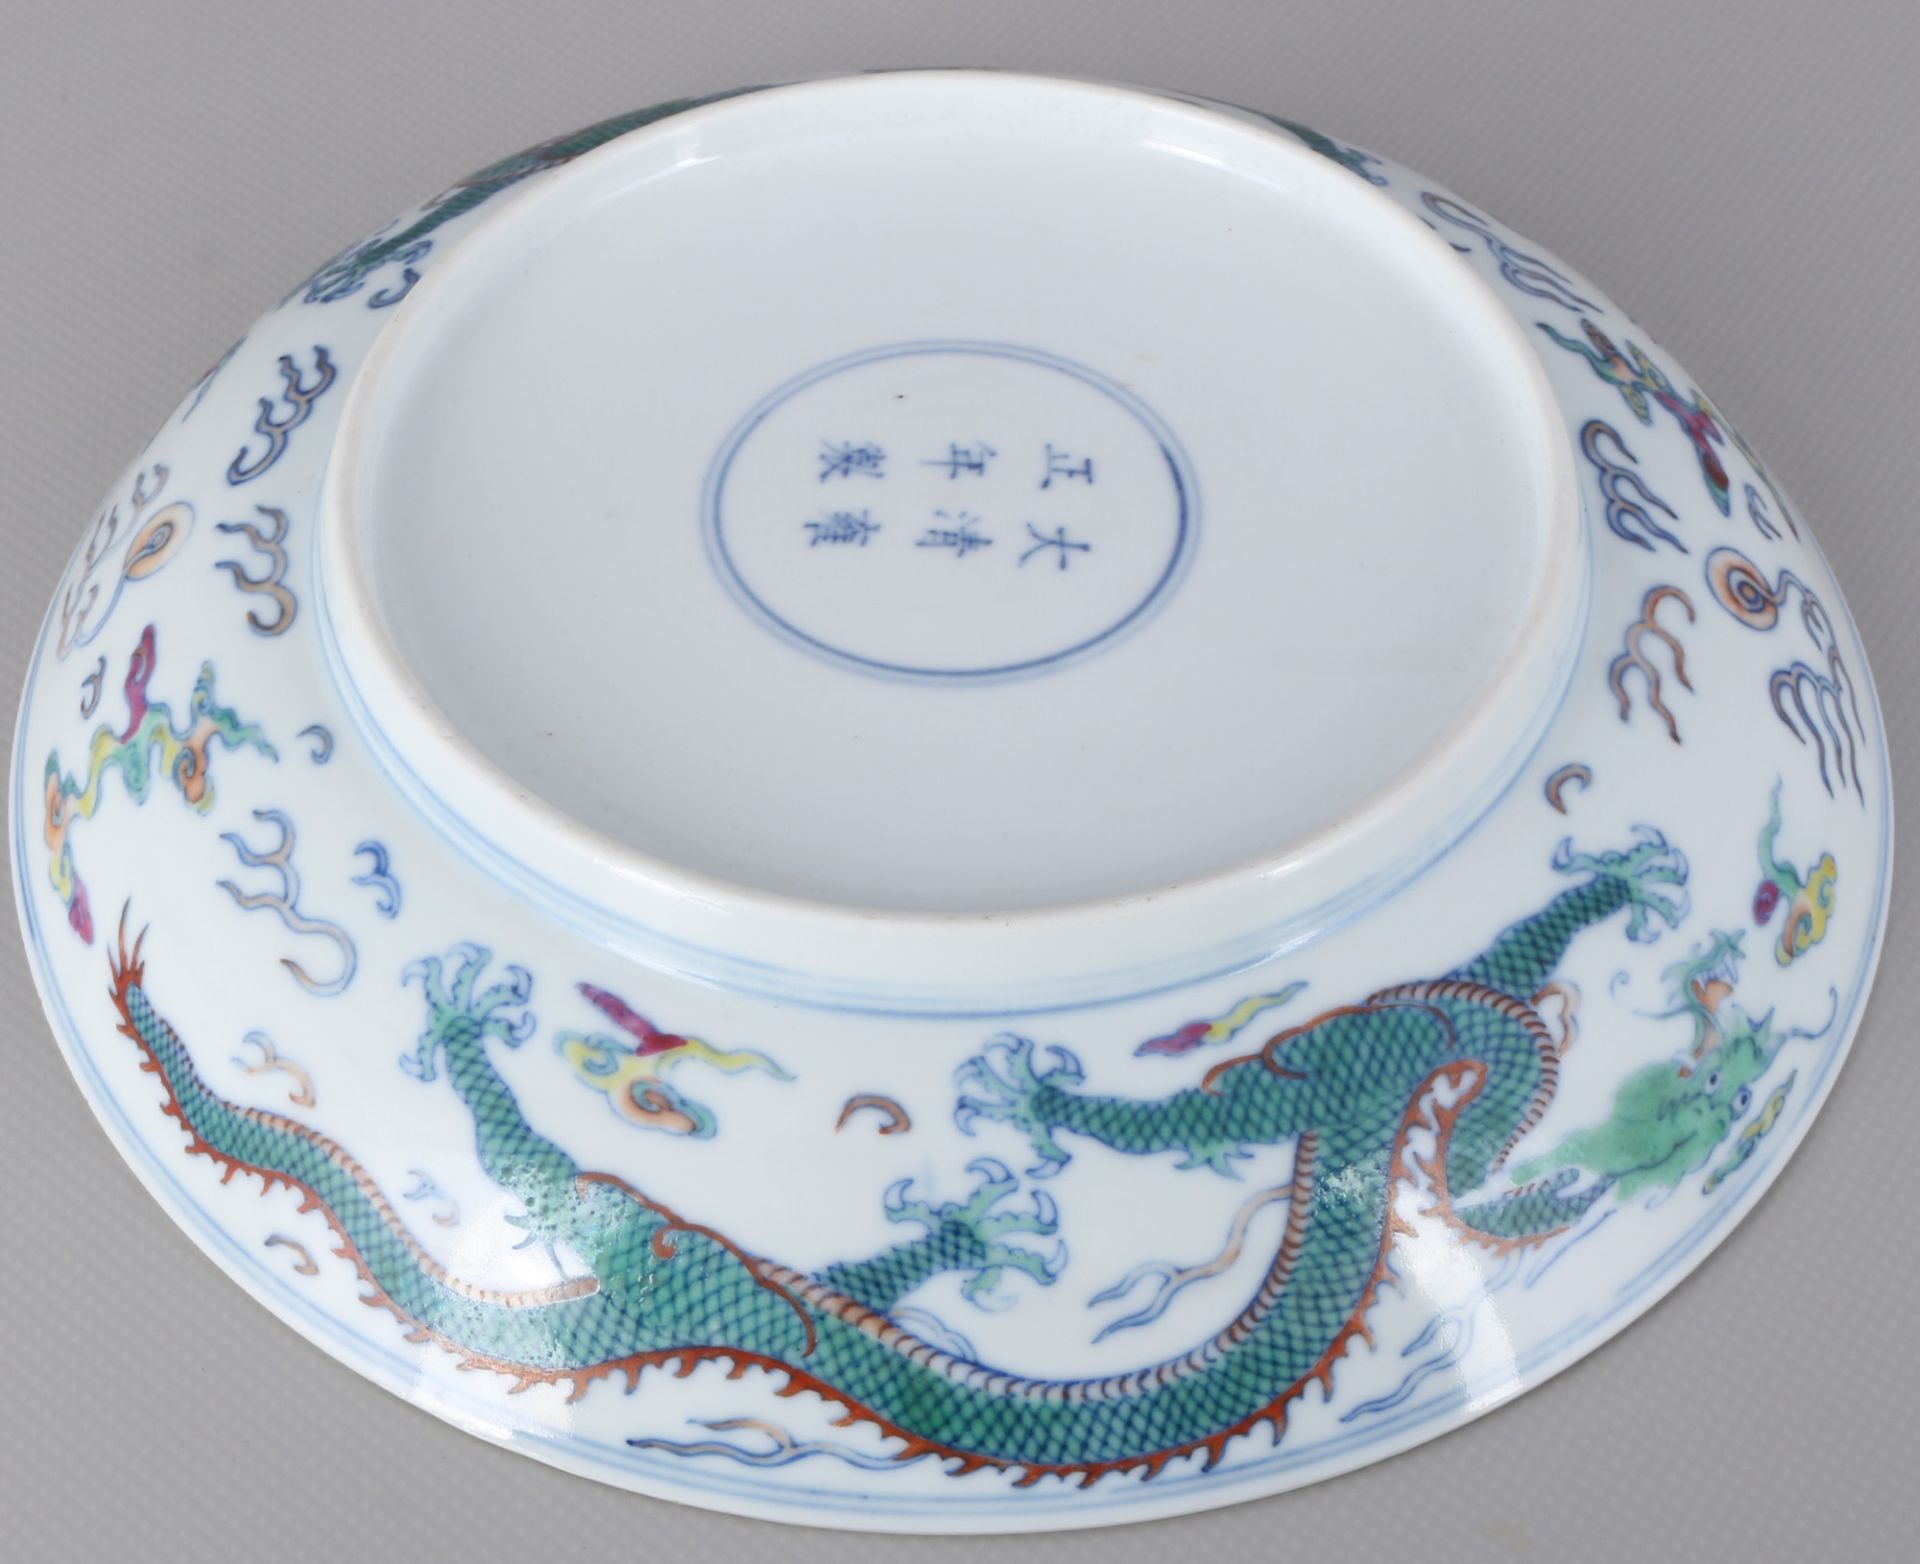 China Imperial doucai bowl Yongzheng period 18th century, - Image 3 of 3